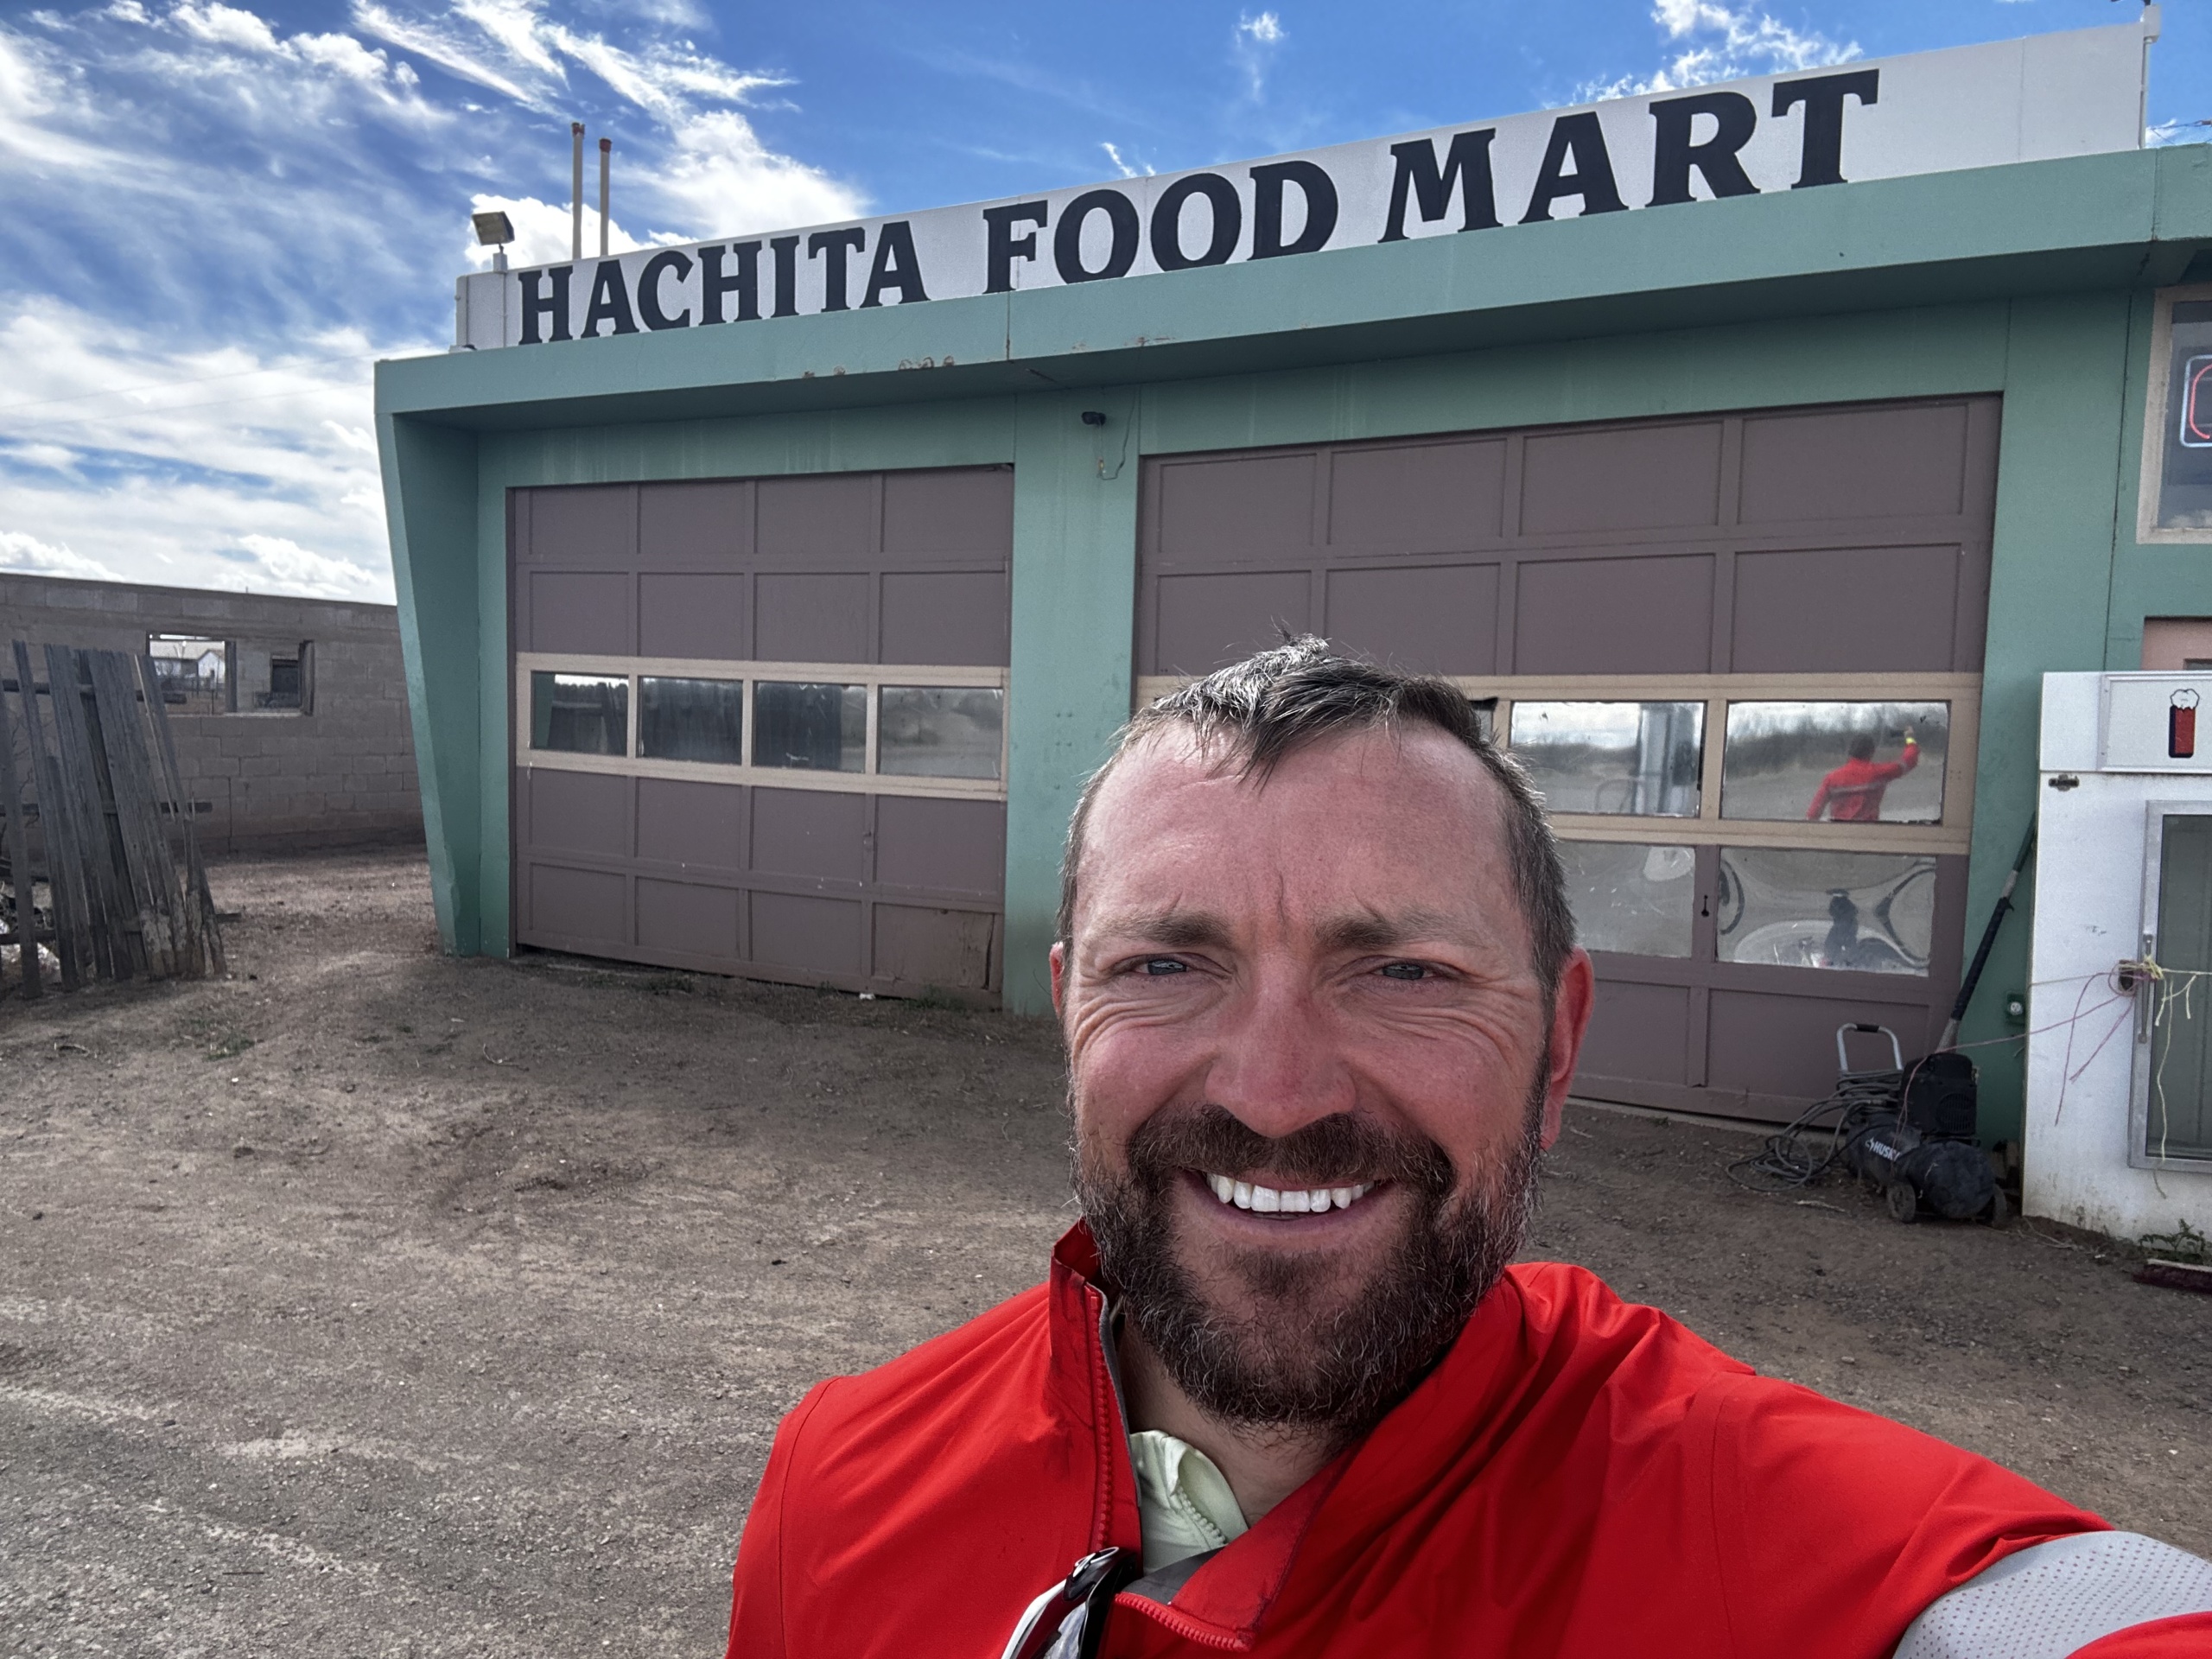 Hachita Food Mart